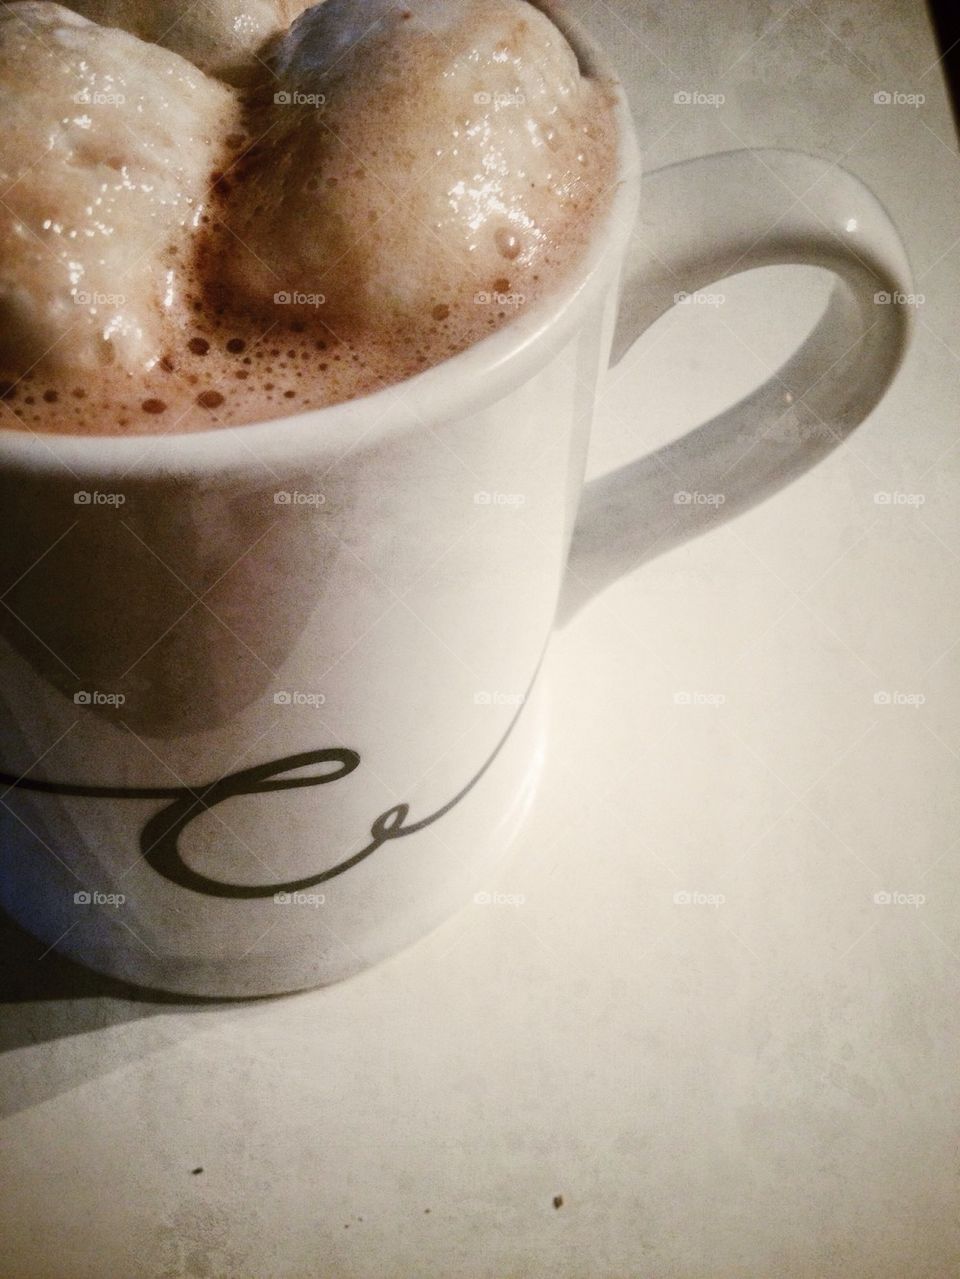 Late Night Hot Chocolate 